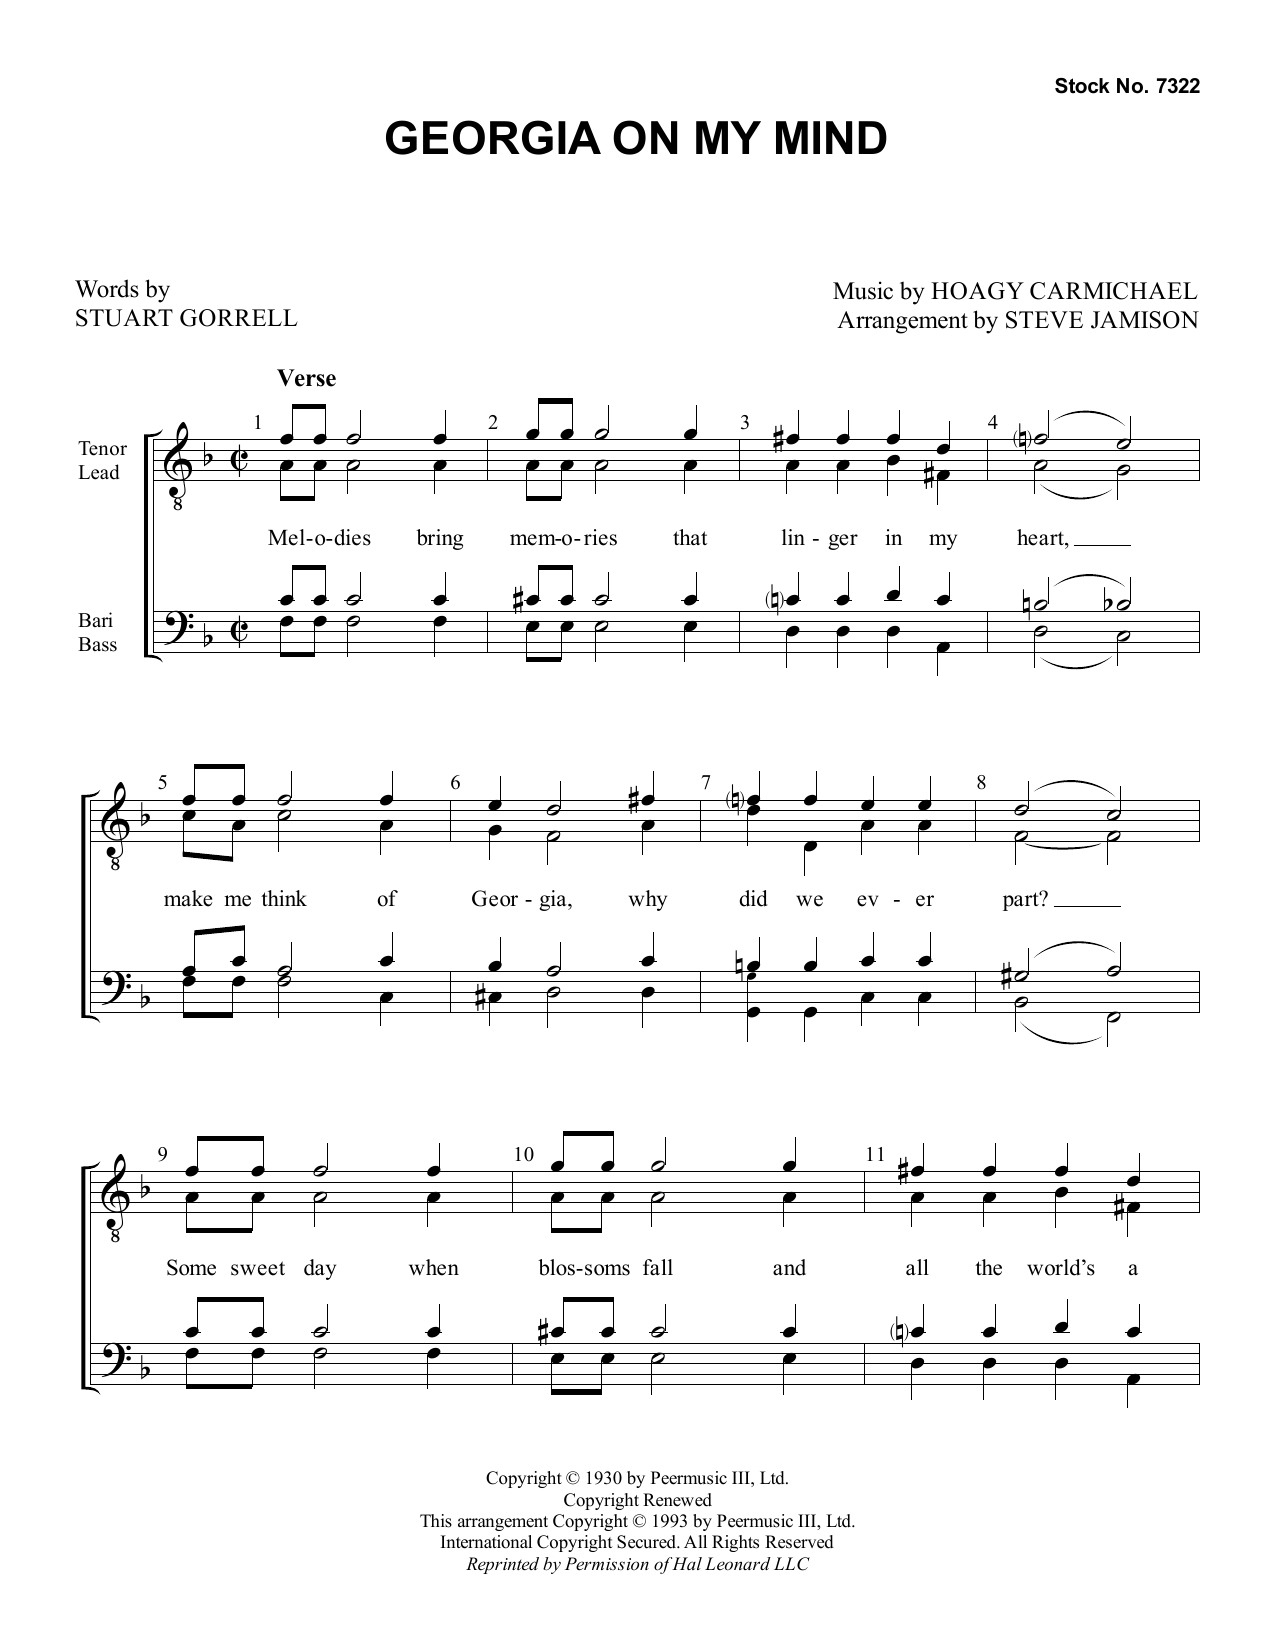 Stuart Gorrell and Hoagy Carmichael Georgia on My Mind (arr. Steve Jamison) Sheet Music Notes & Chords for SSAA Choir - Download or Print PDF